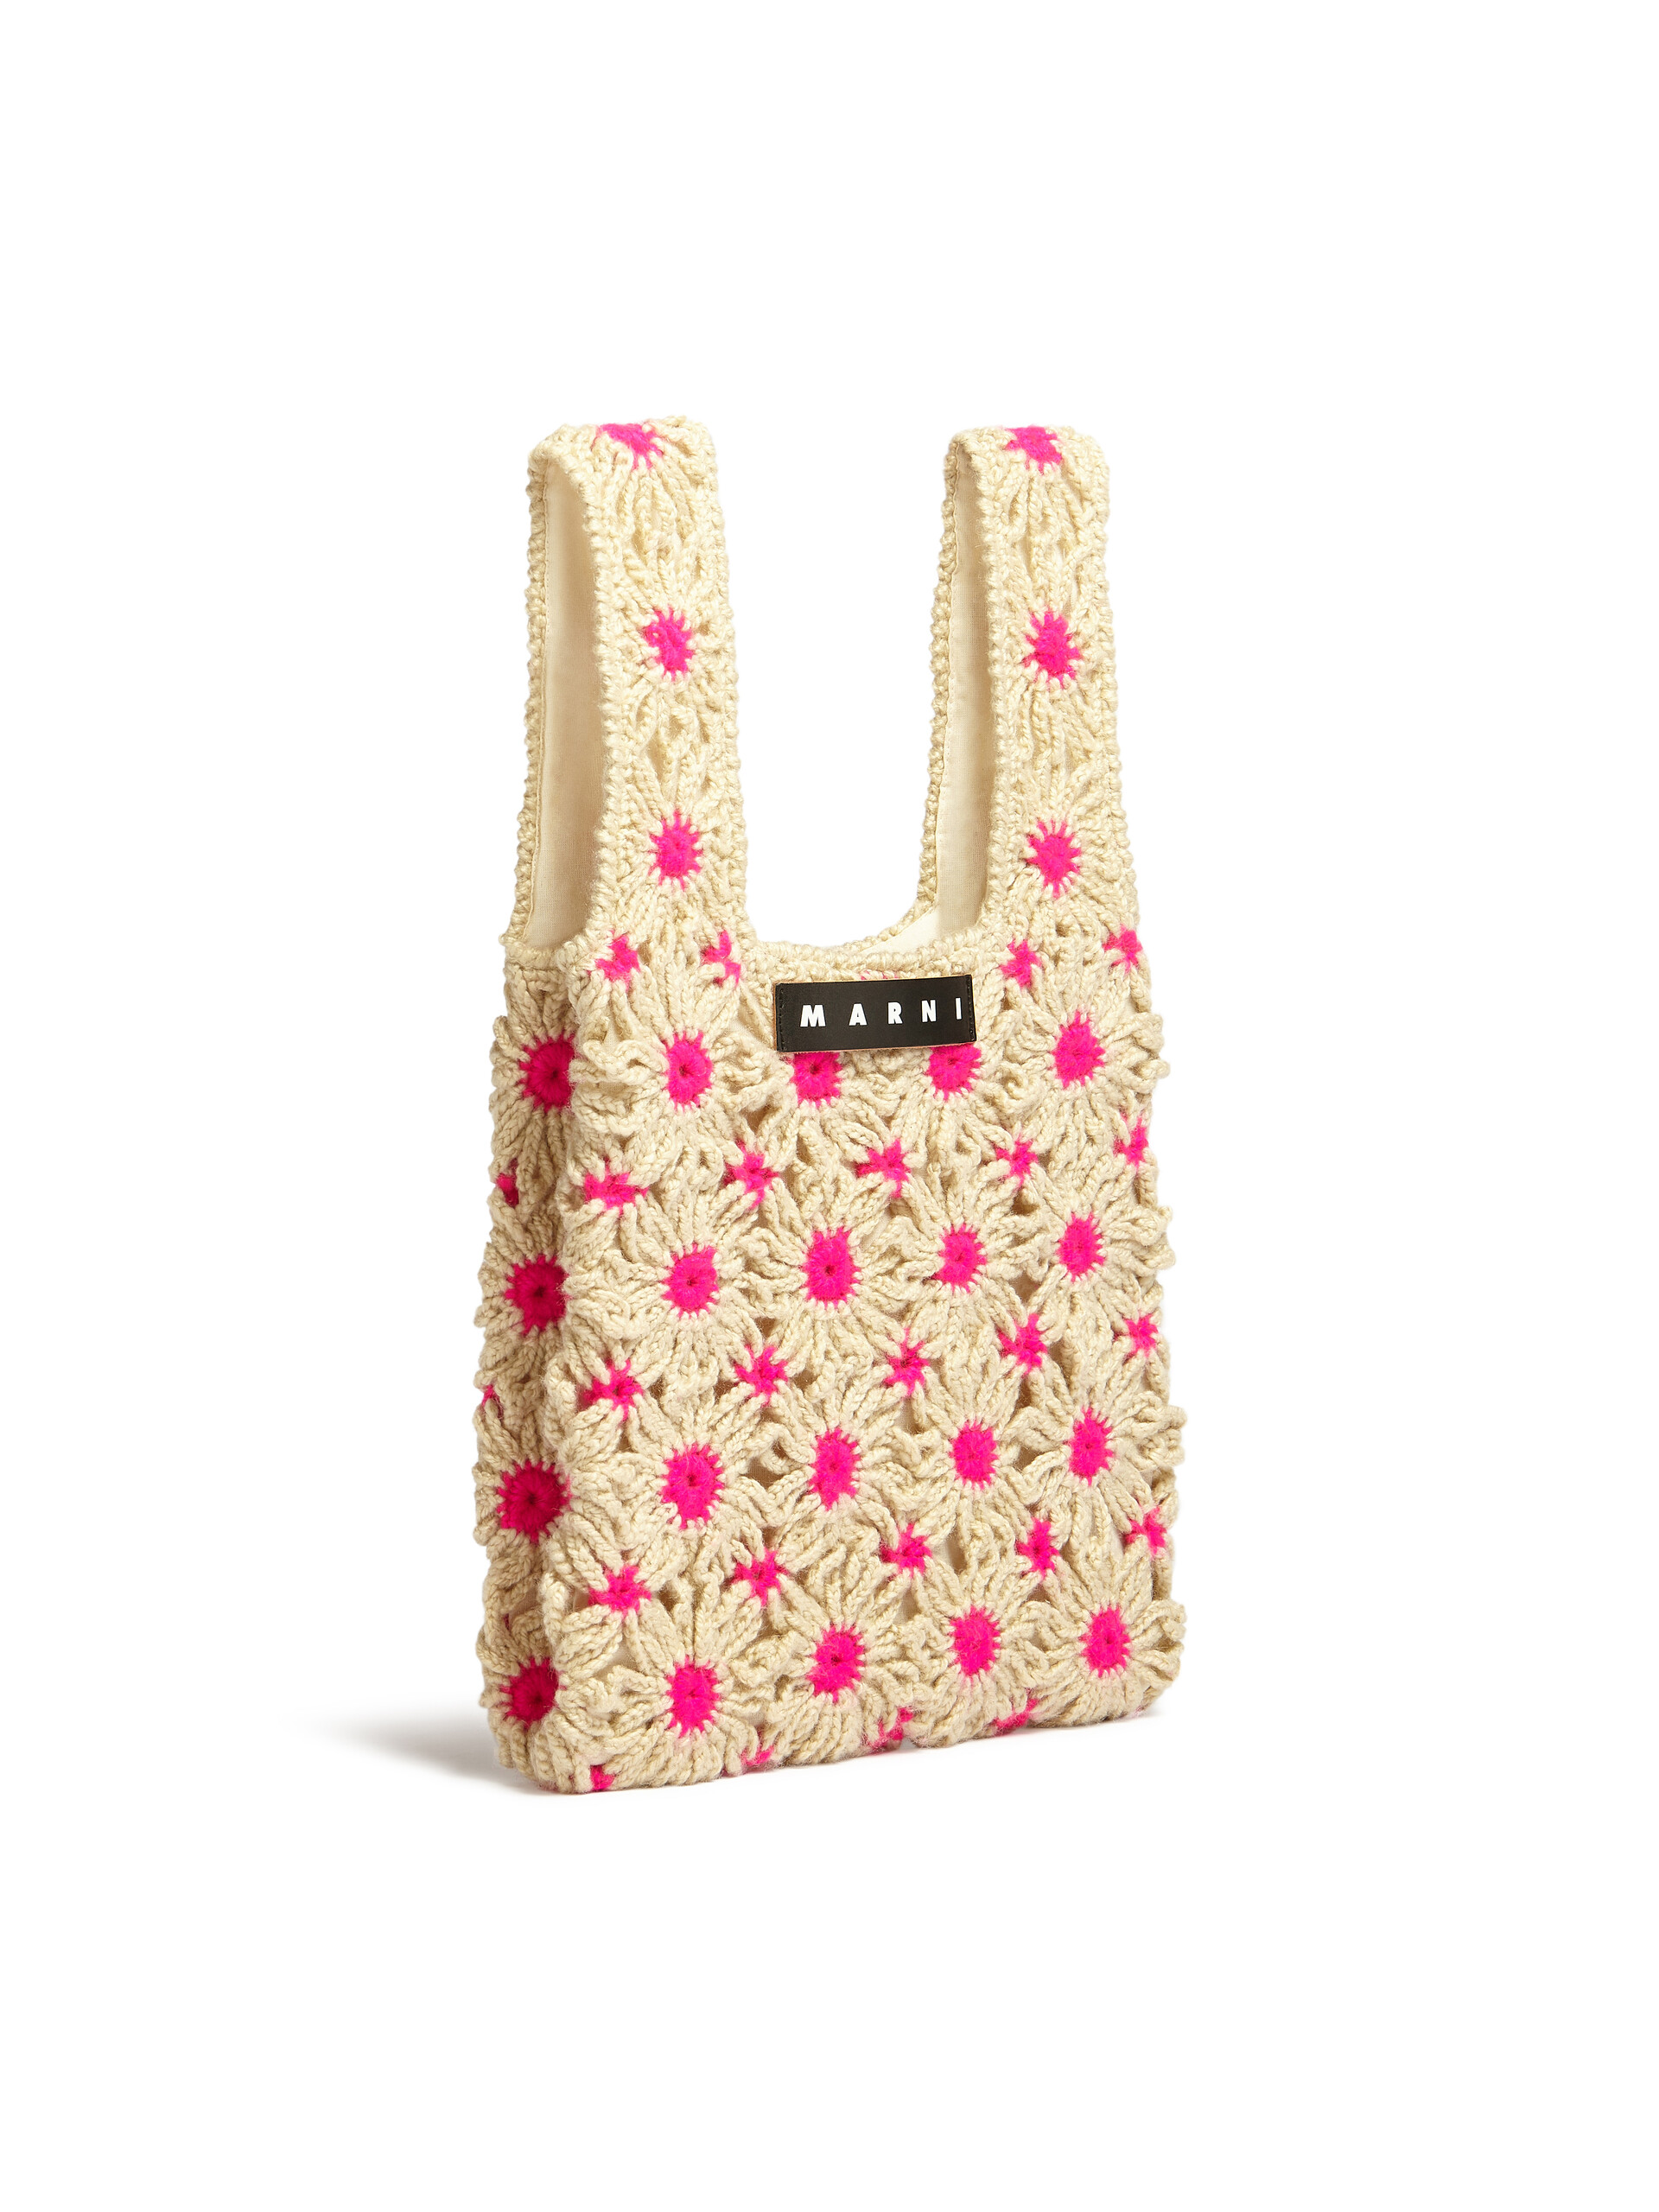 MARNI MARKET FISH bag in pink crochet - Shopping Bags - Image 2